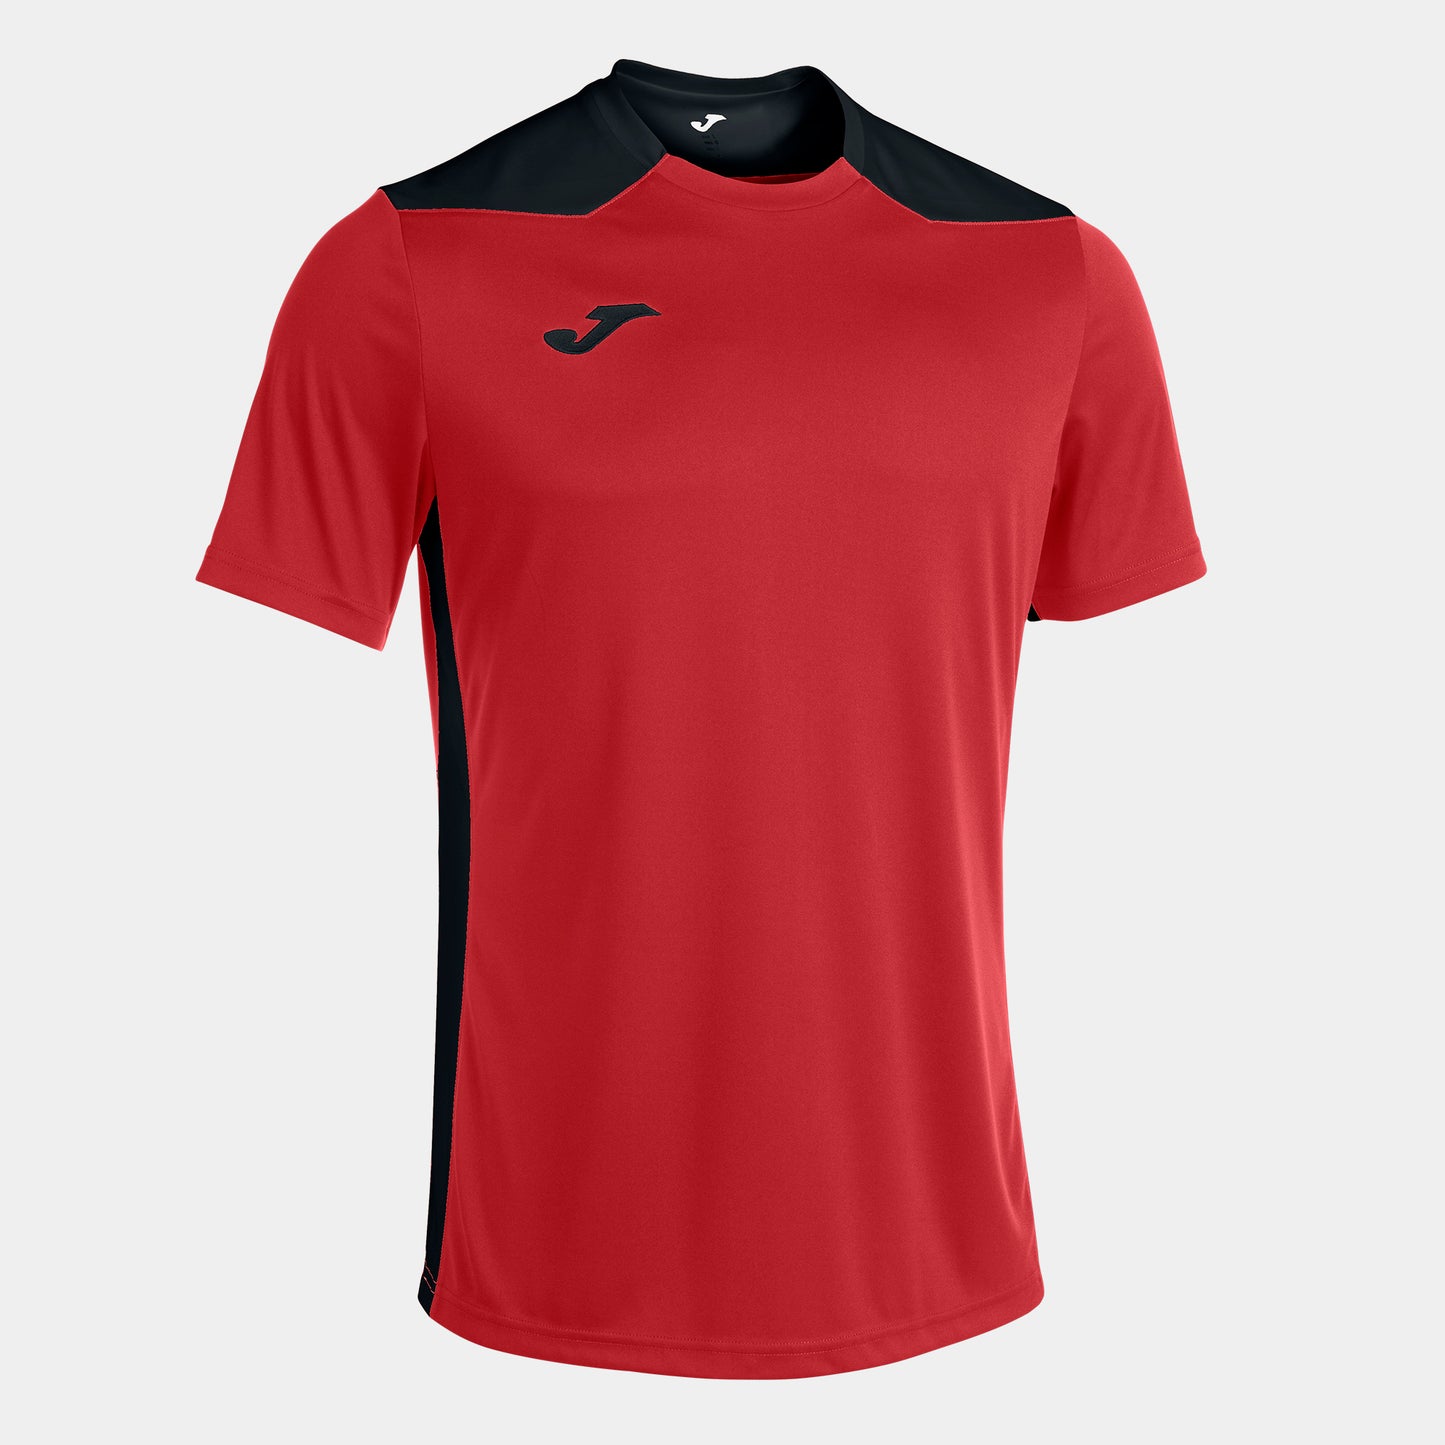 Championship IV T-shirt - rød/sort - Joma